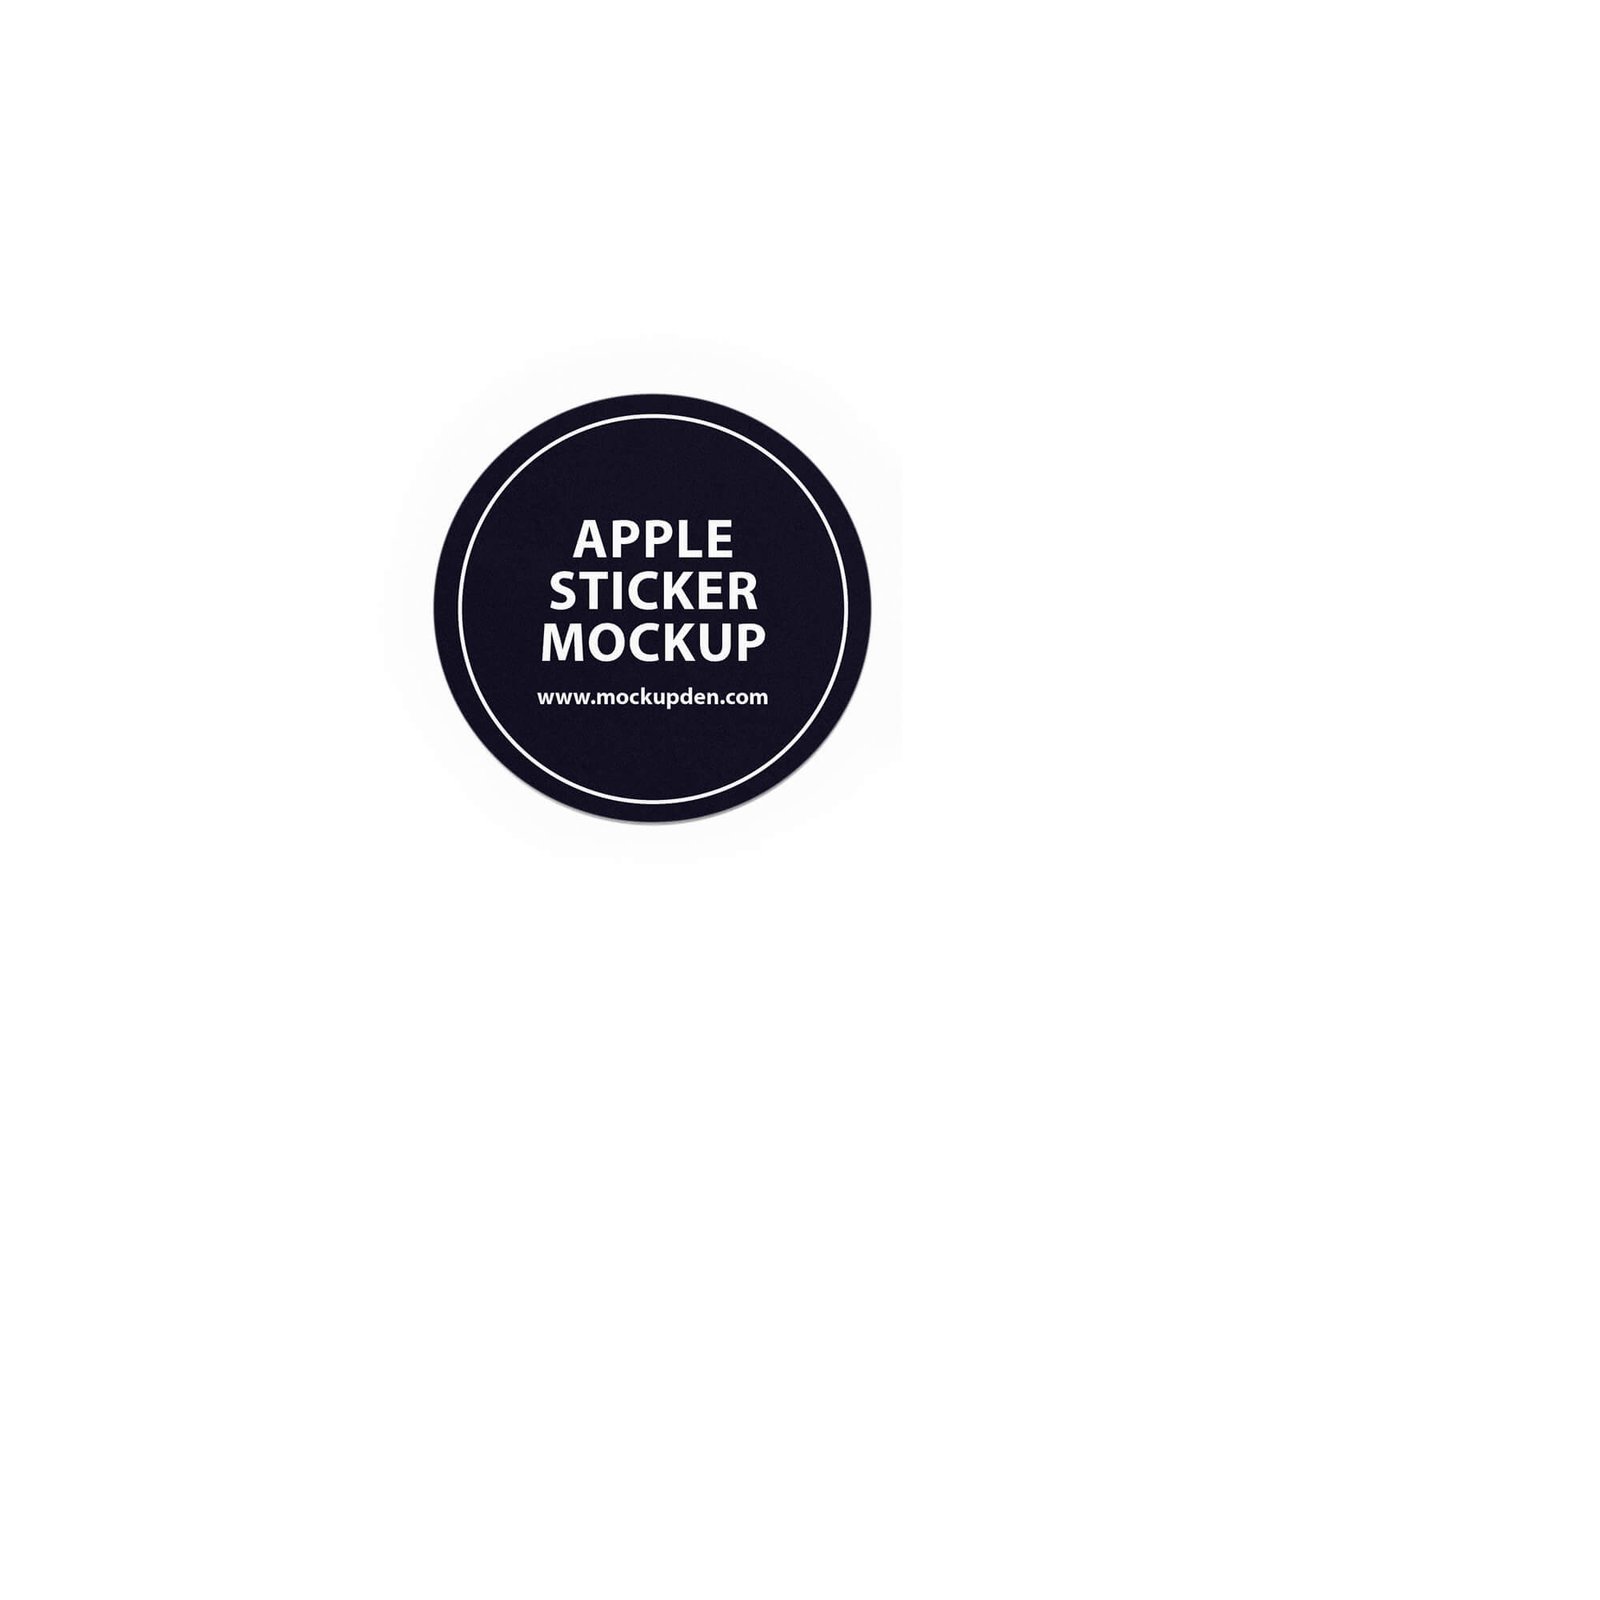 Design Free Apple Laptop Sticker Mockup PSD Template